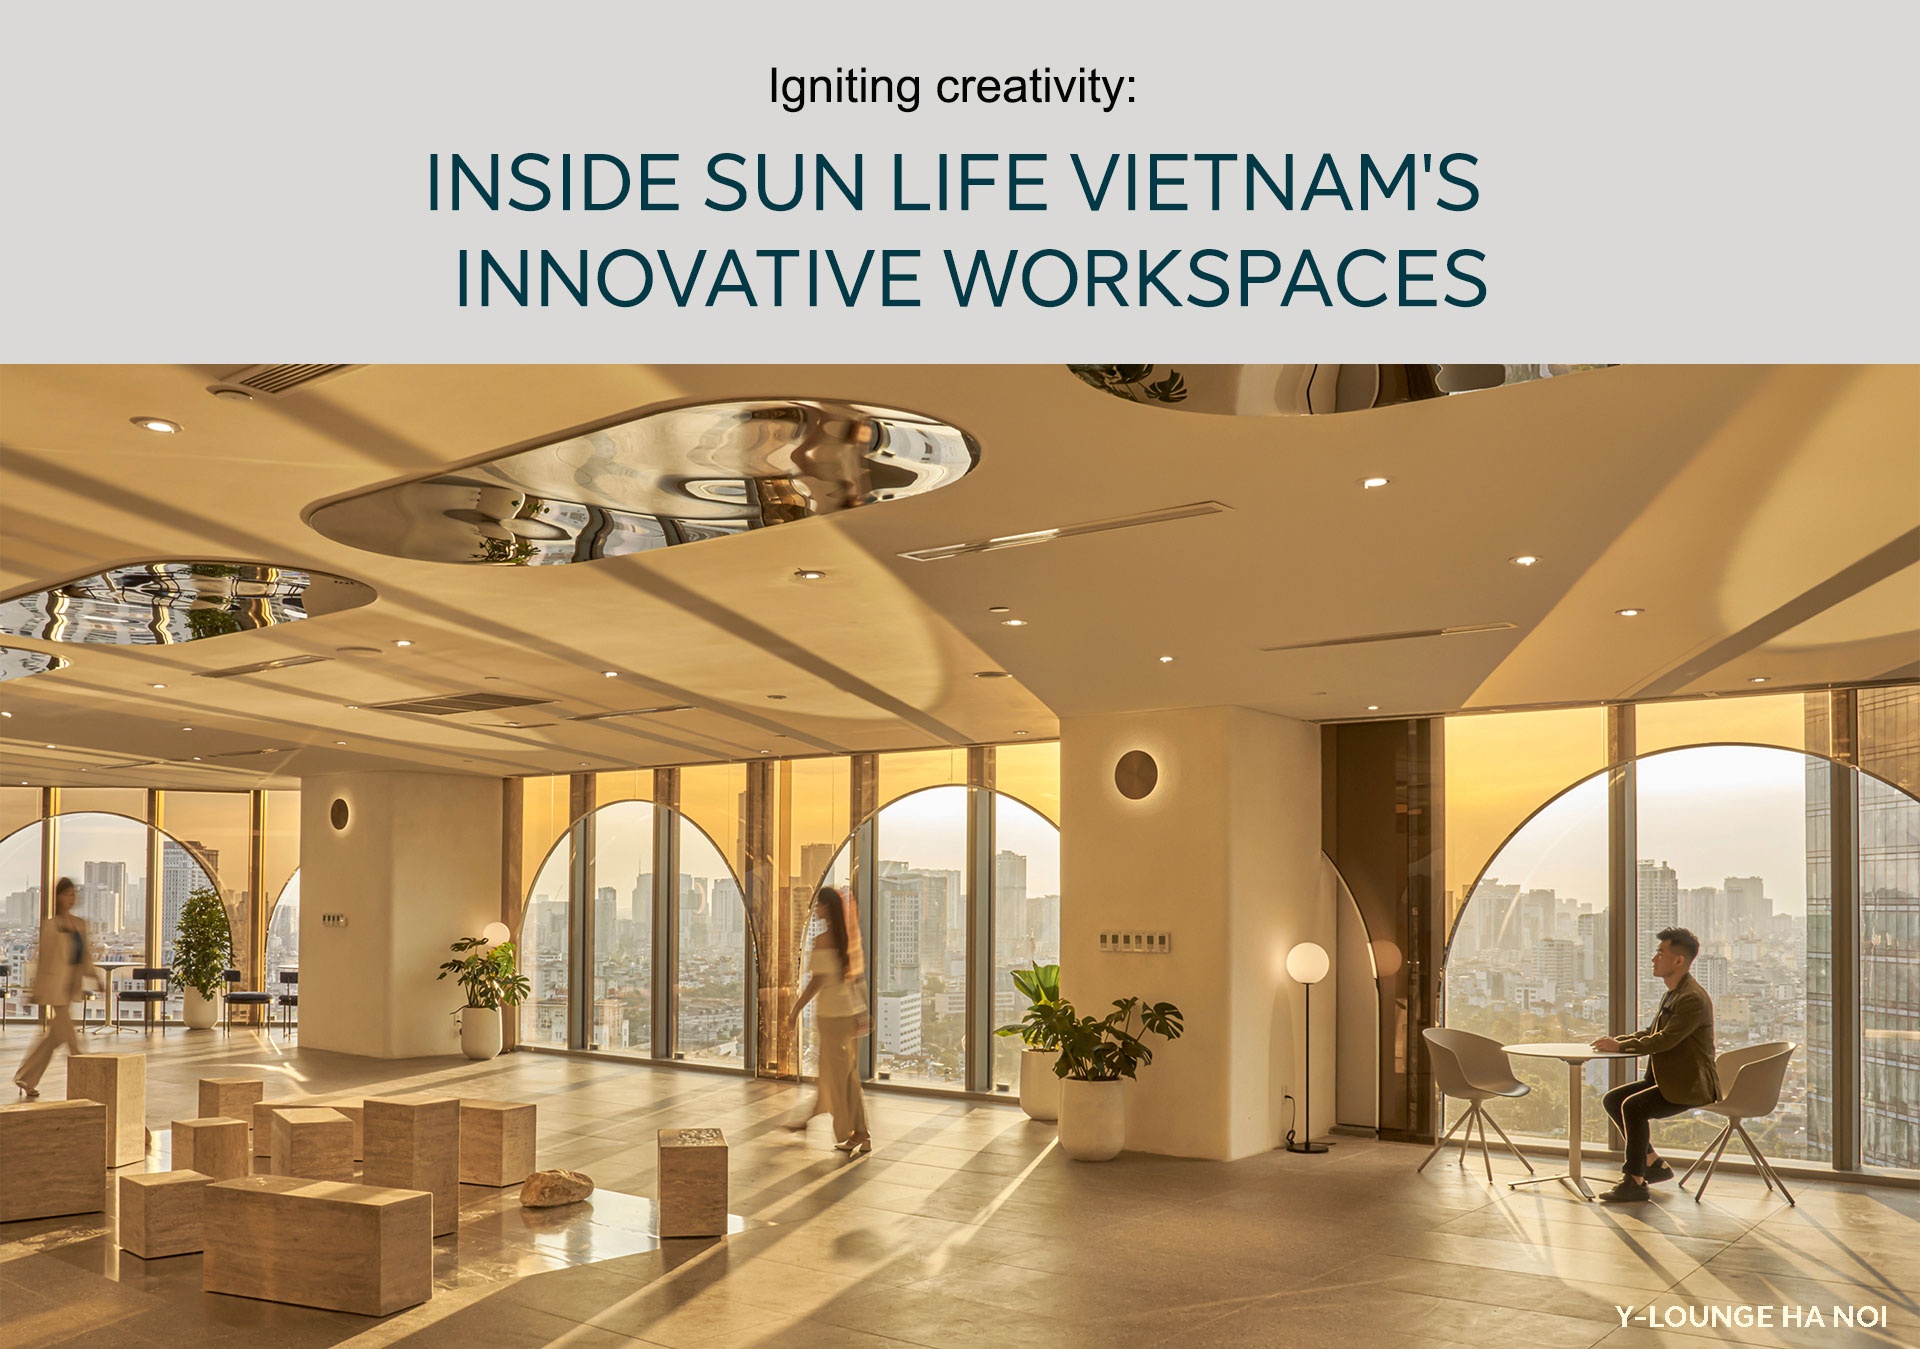 Igniting creativity: inside Sun Life Vietnam's innovative workspaces